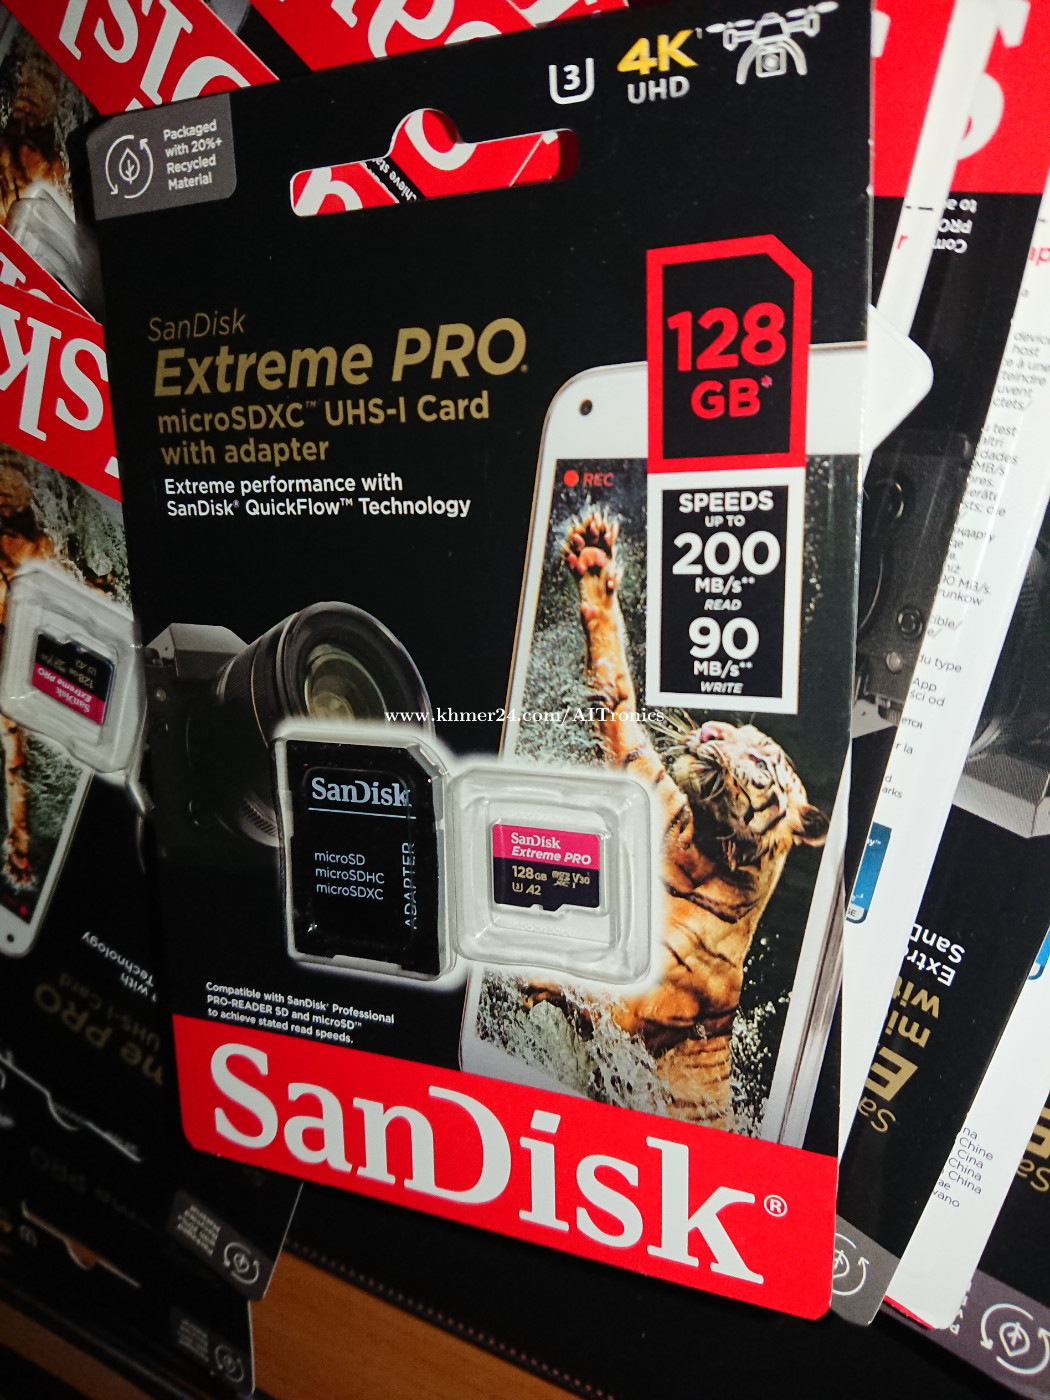 SanDisk Extreme Pro Memory Card 128GB SDXC UHS-I U3 A2 V30 Micro